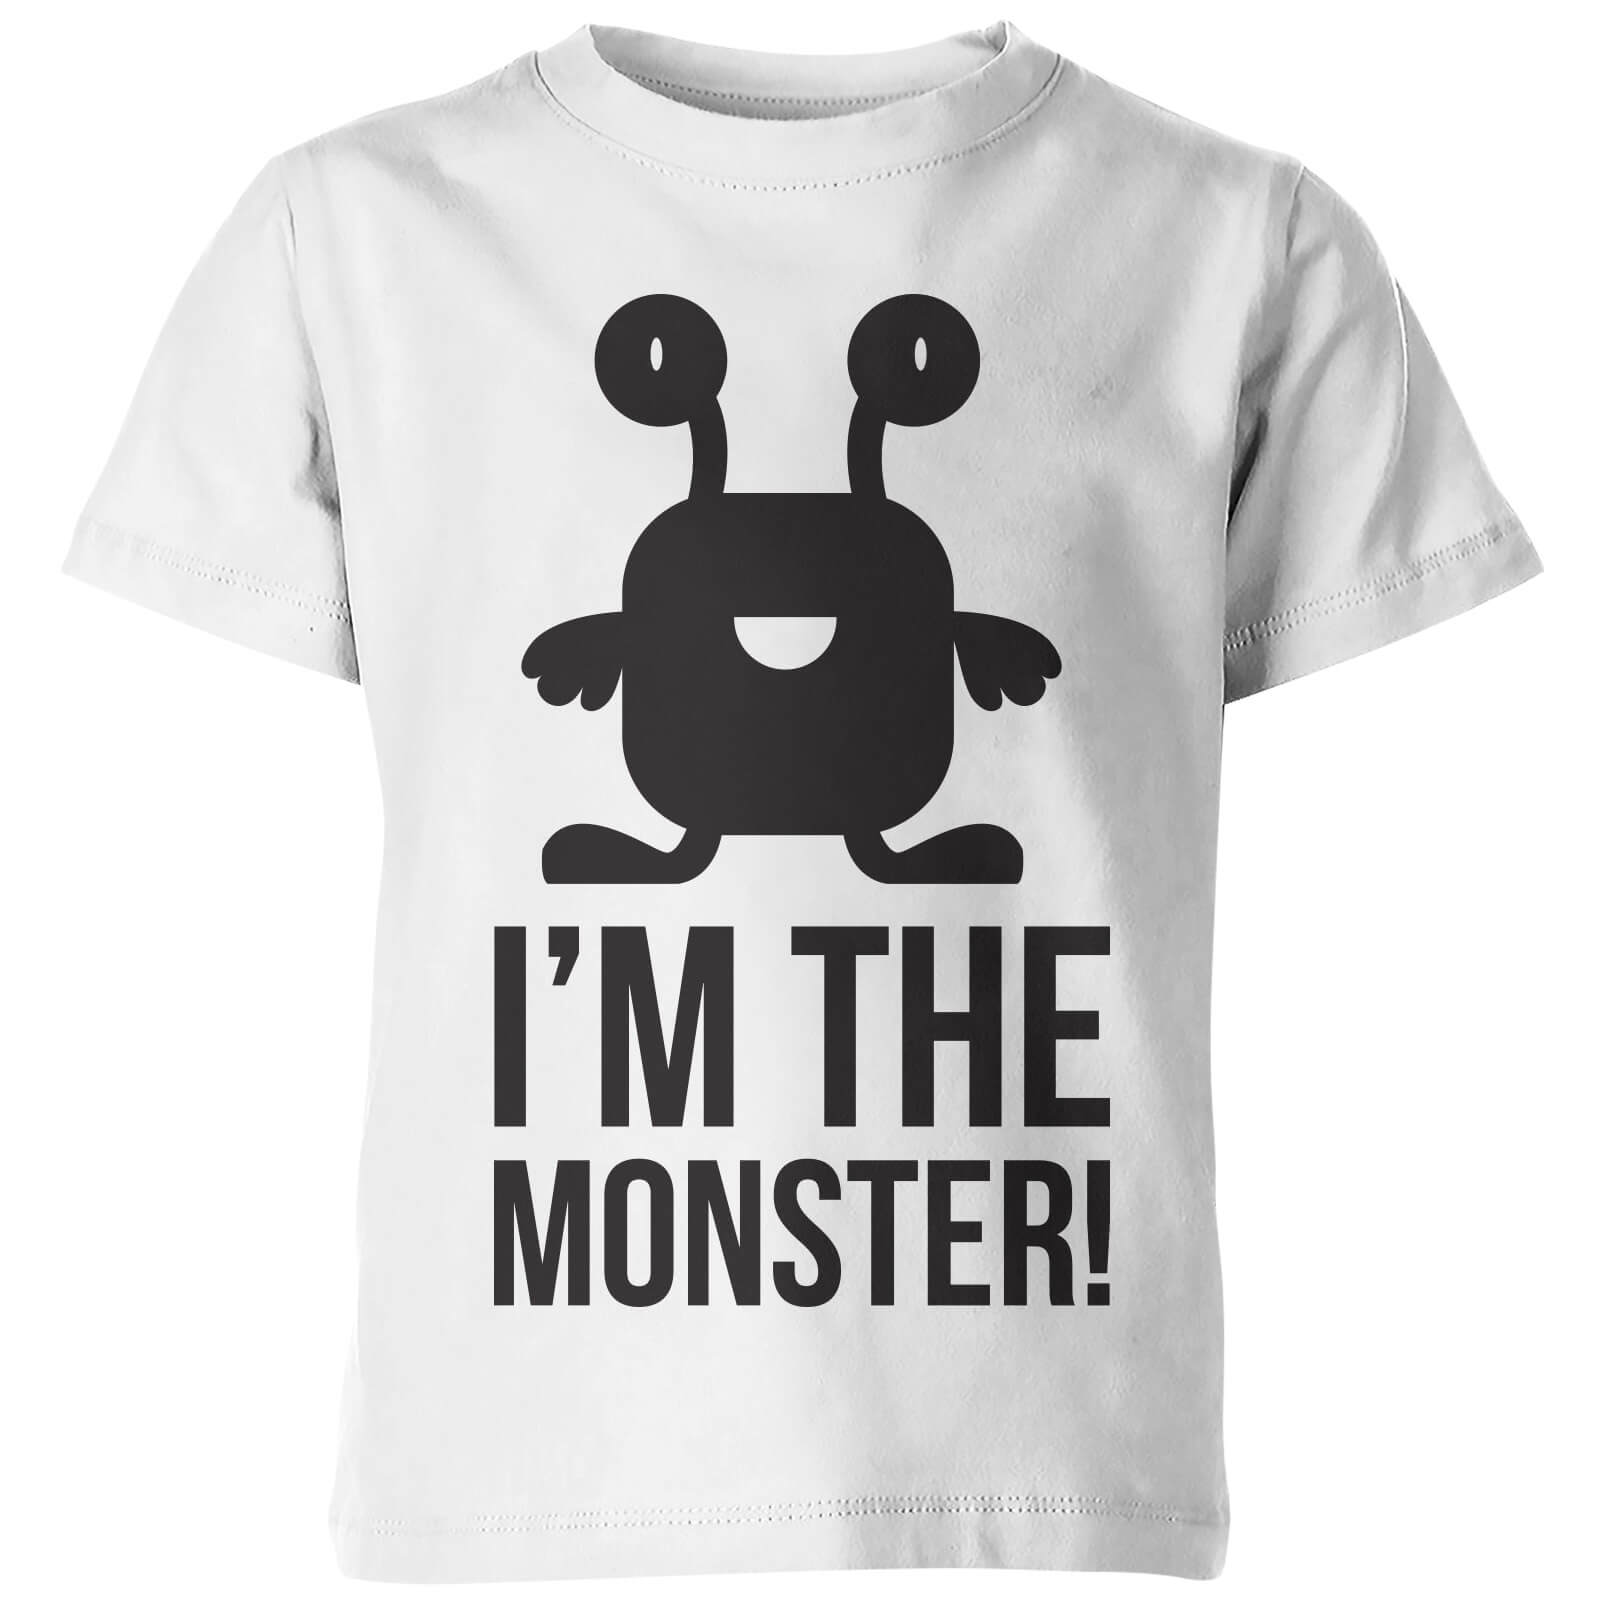 My Little Rascal Kids Im The Monster! White T Shirt   7 8 Years   Green